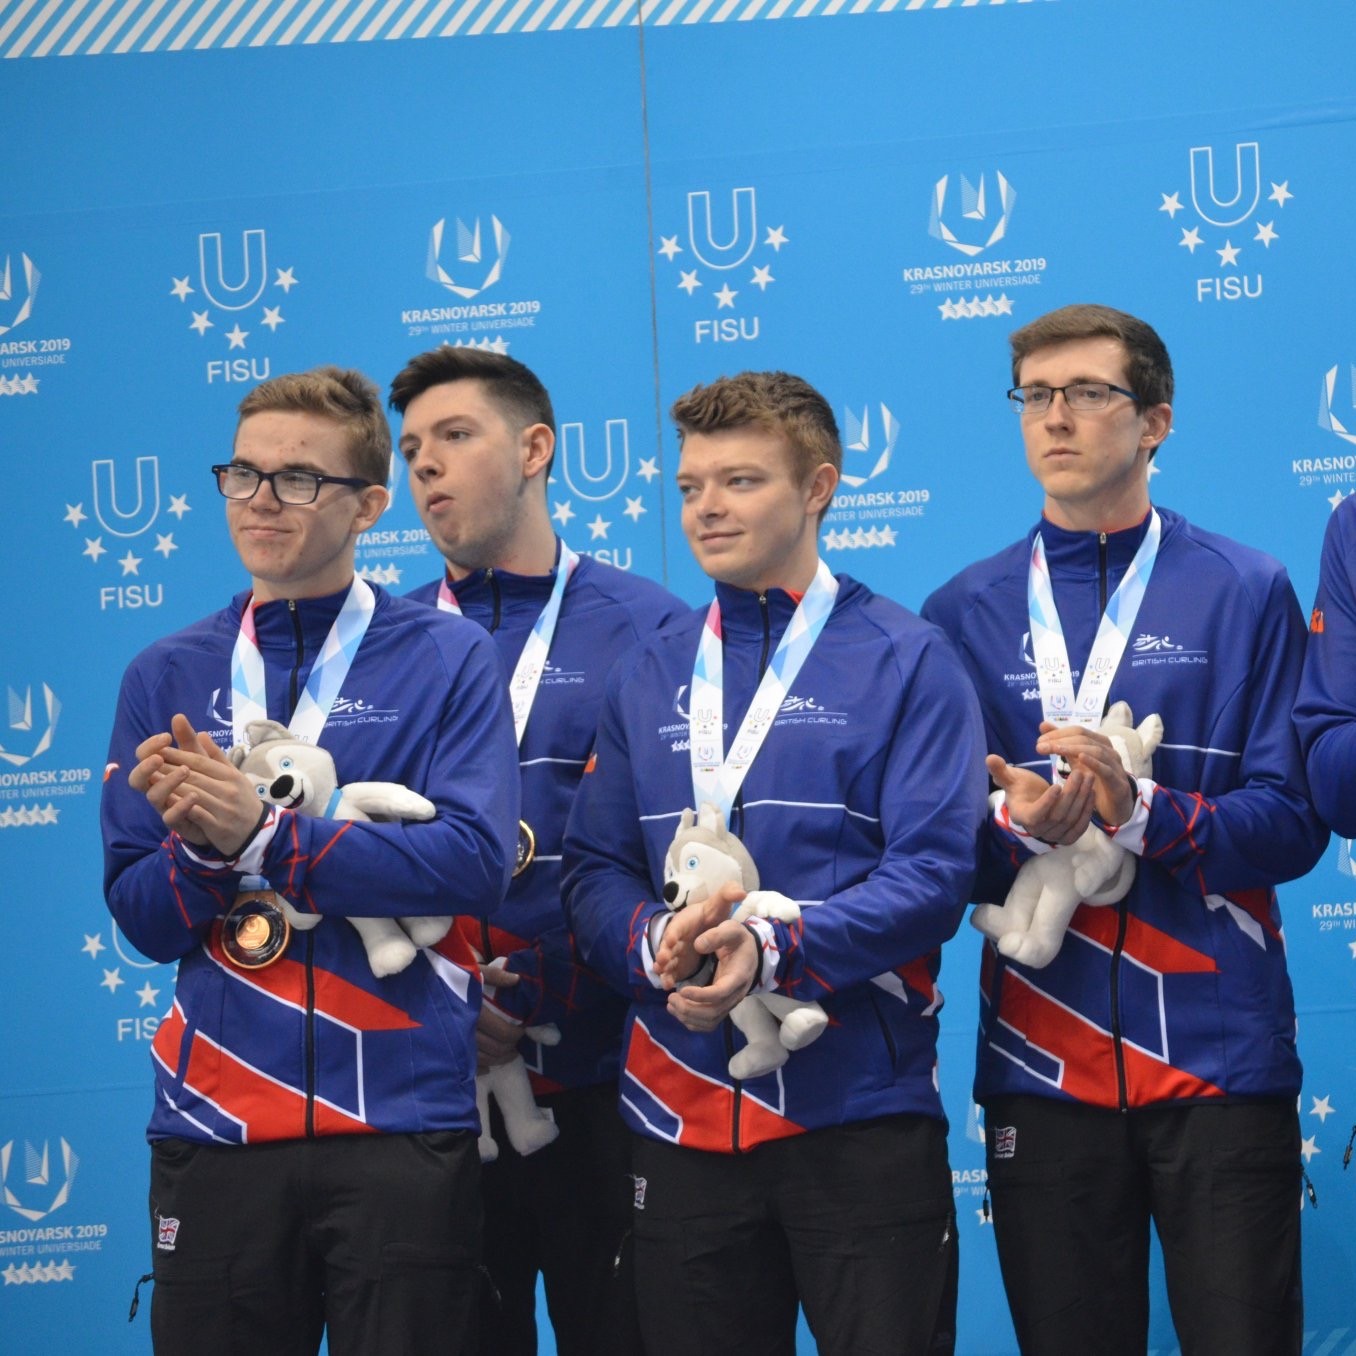 Ross Whyte (far left) impressed as men's skip in Russia.